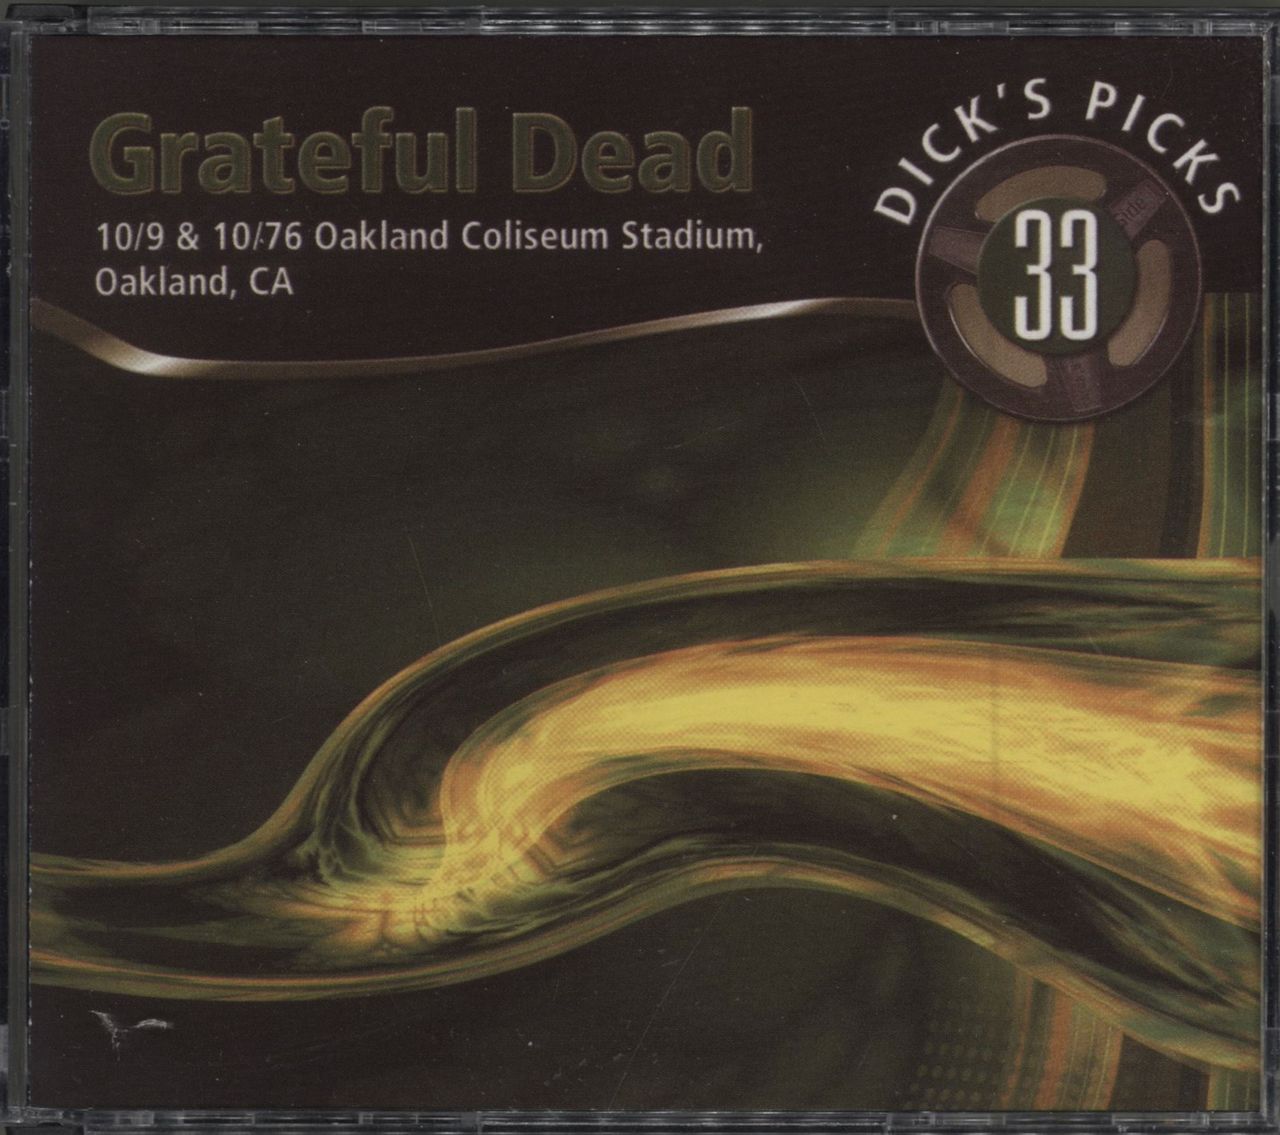 Grateful Dead Dick's Picks Volume Thirty Three US 4-CD album set RGM-0020